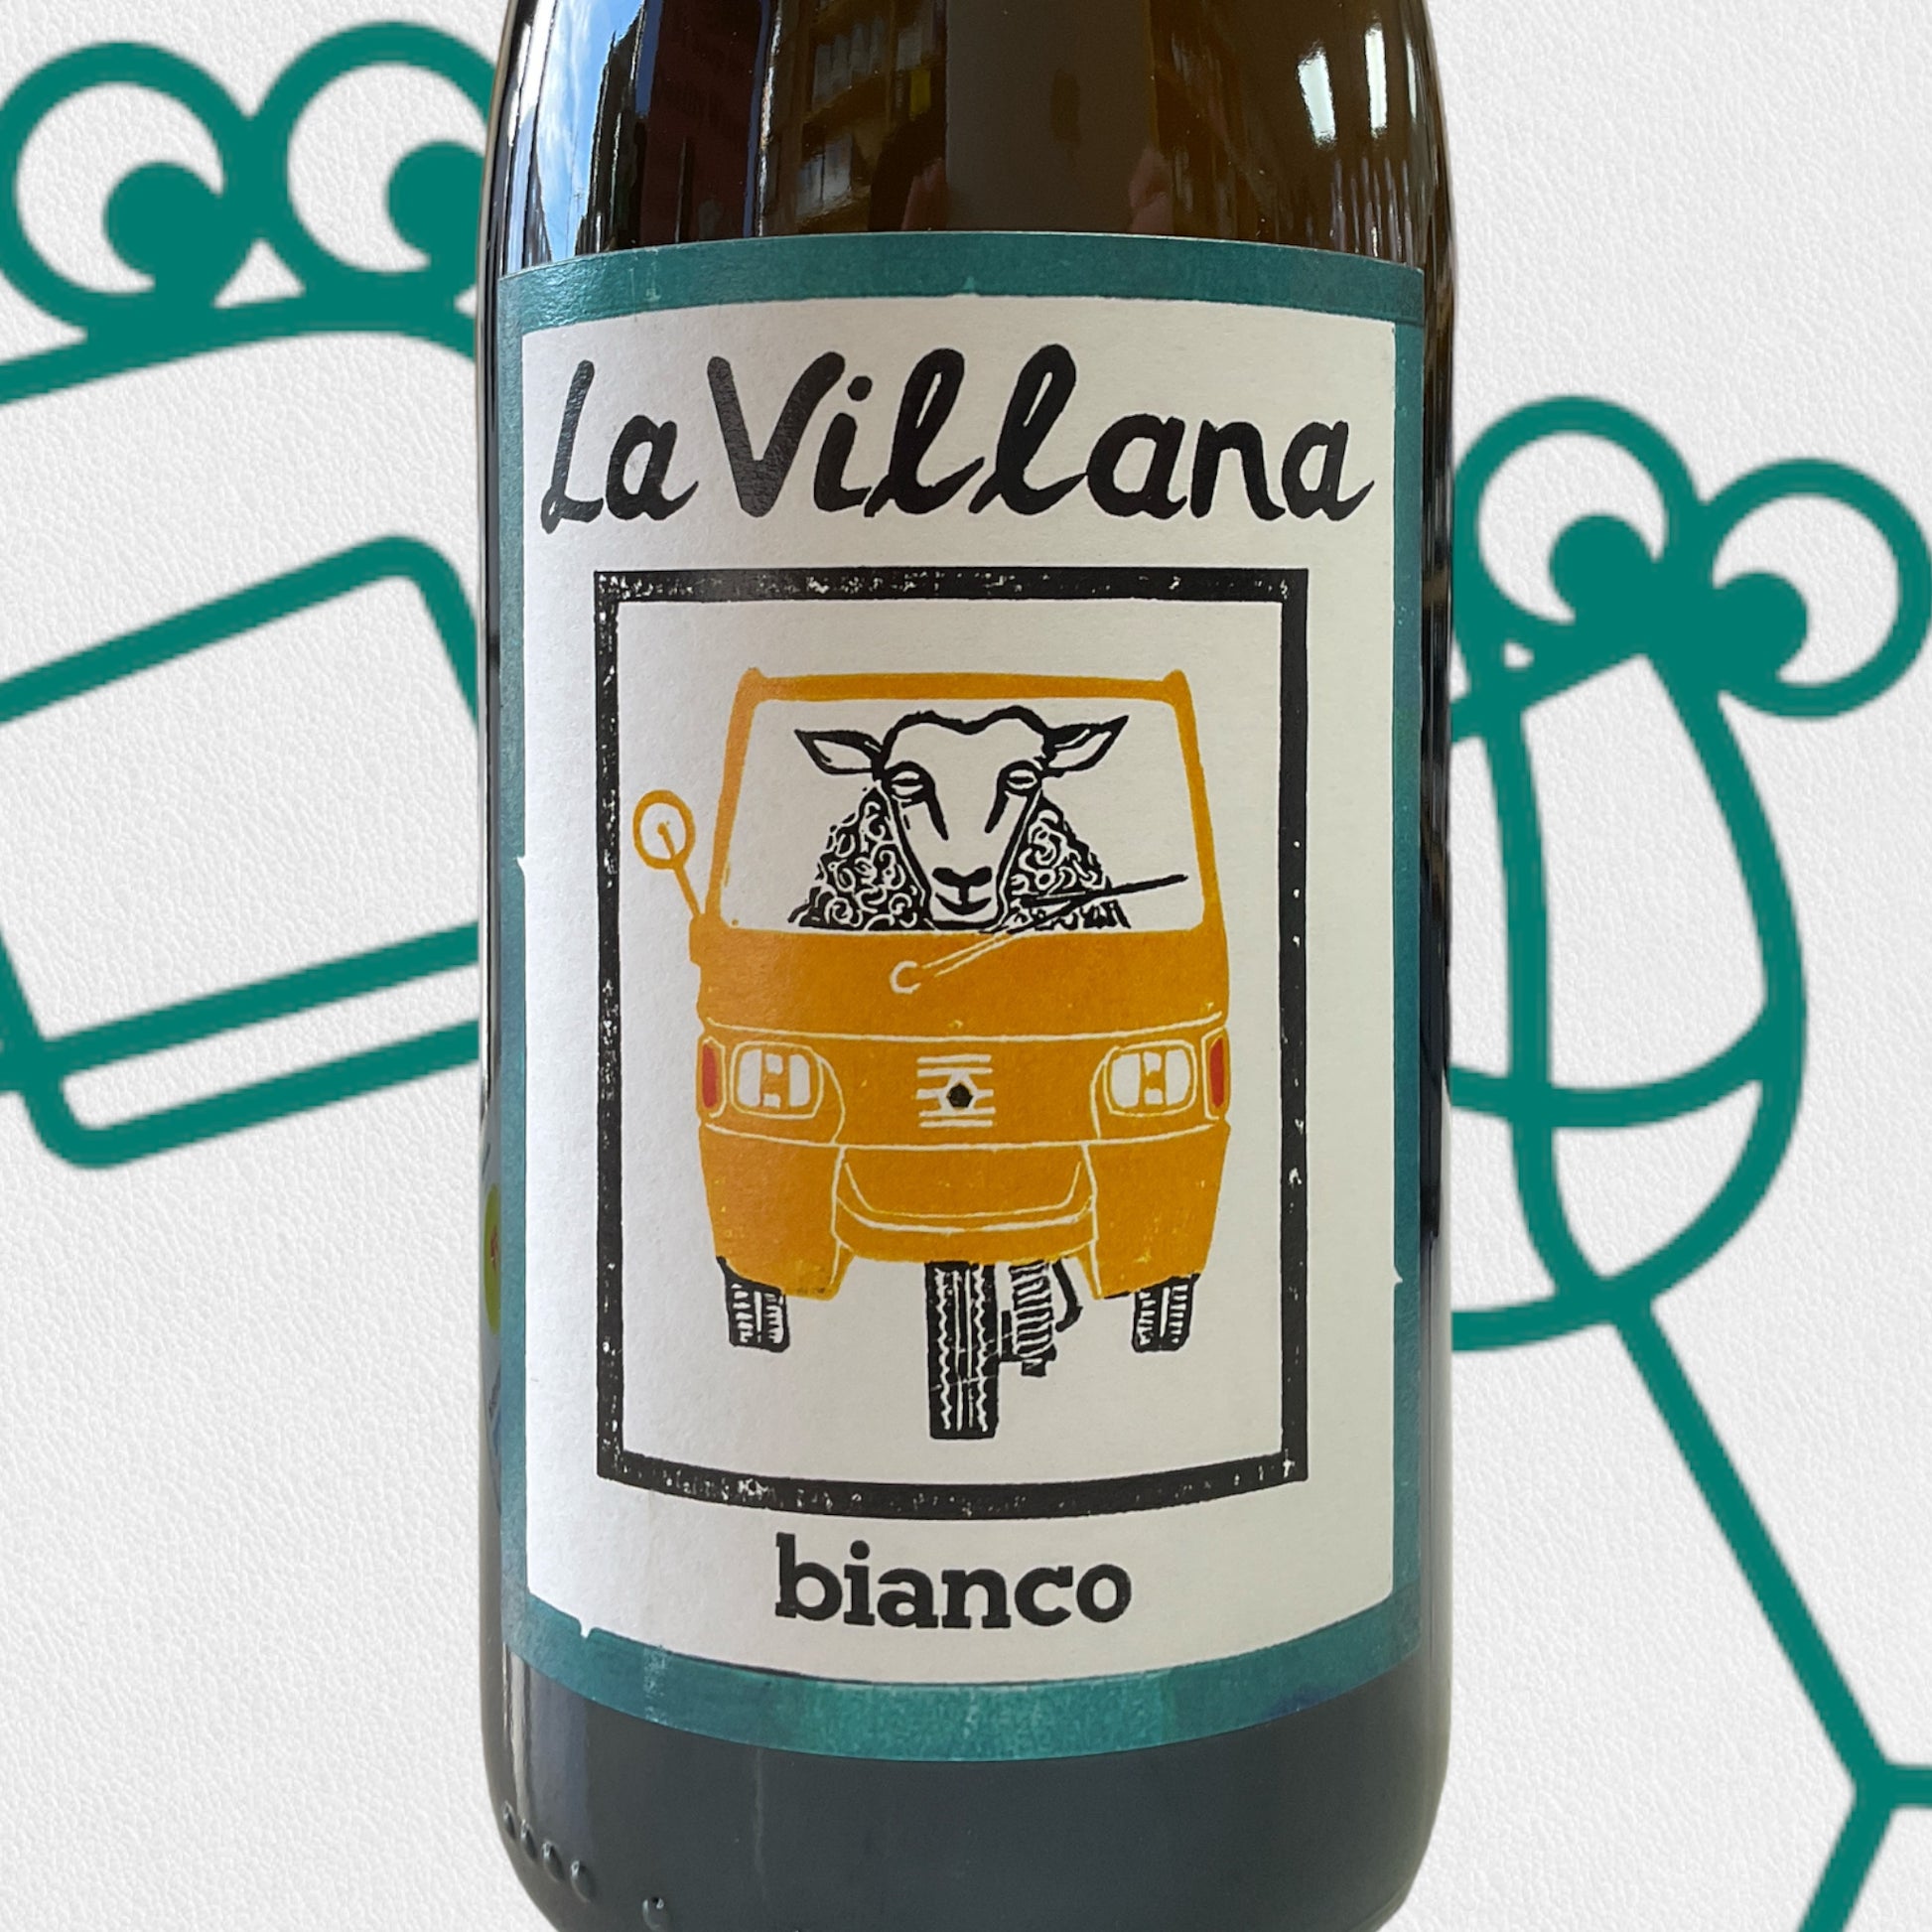 La Villana Bianco NV Lazio, Italy - Williston Park Wines & Spirits